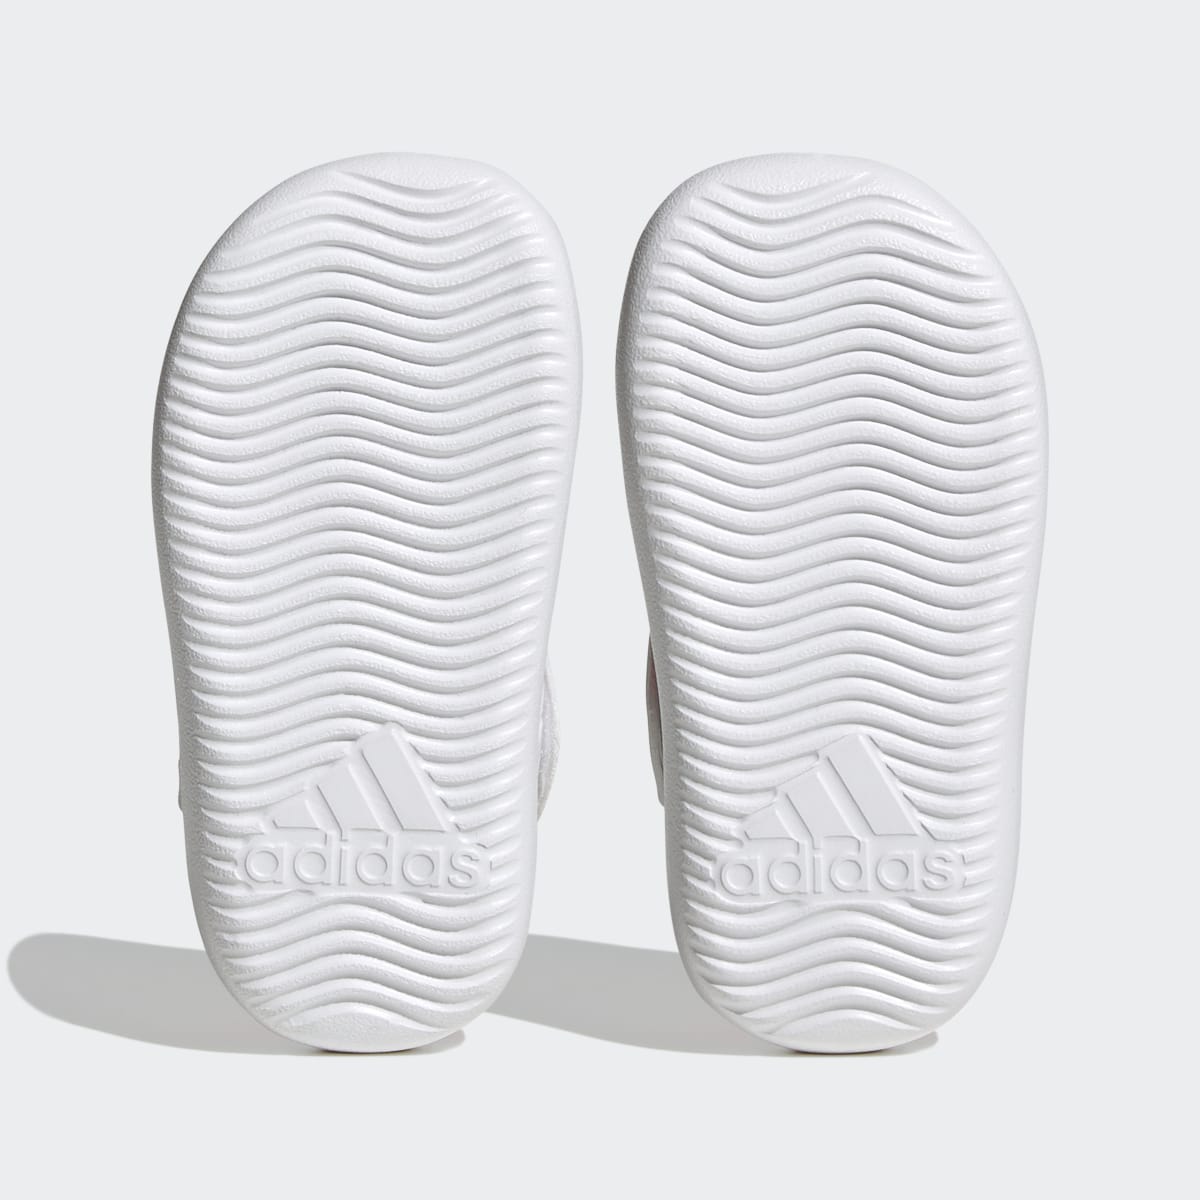 Adidas Closed-Toe Summer Water Sandals. 4